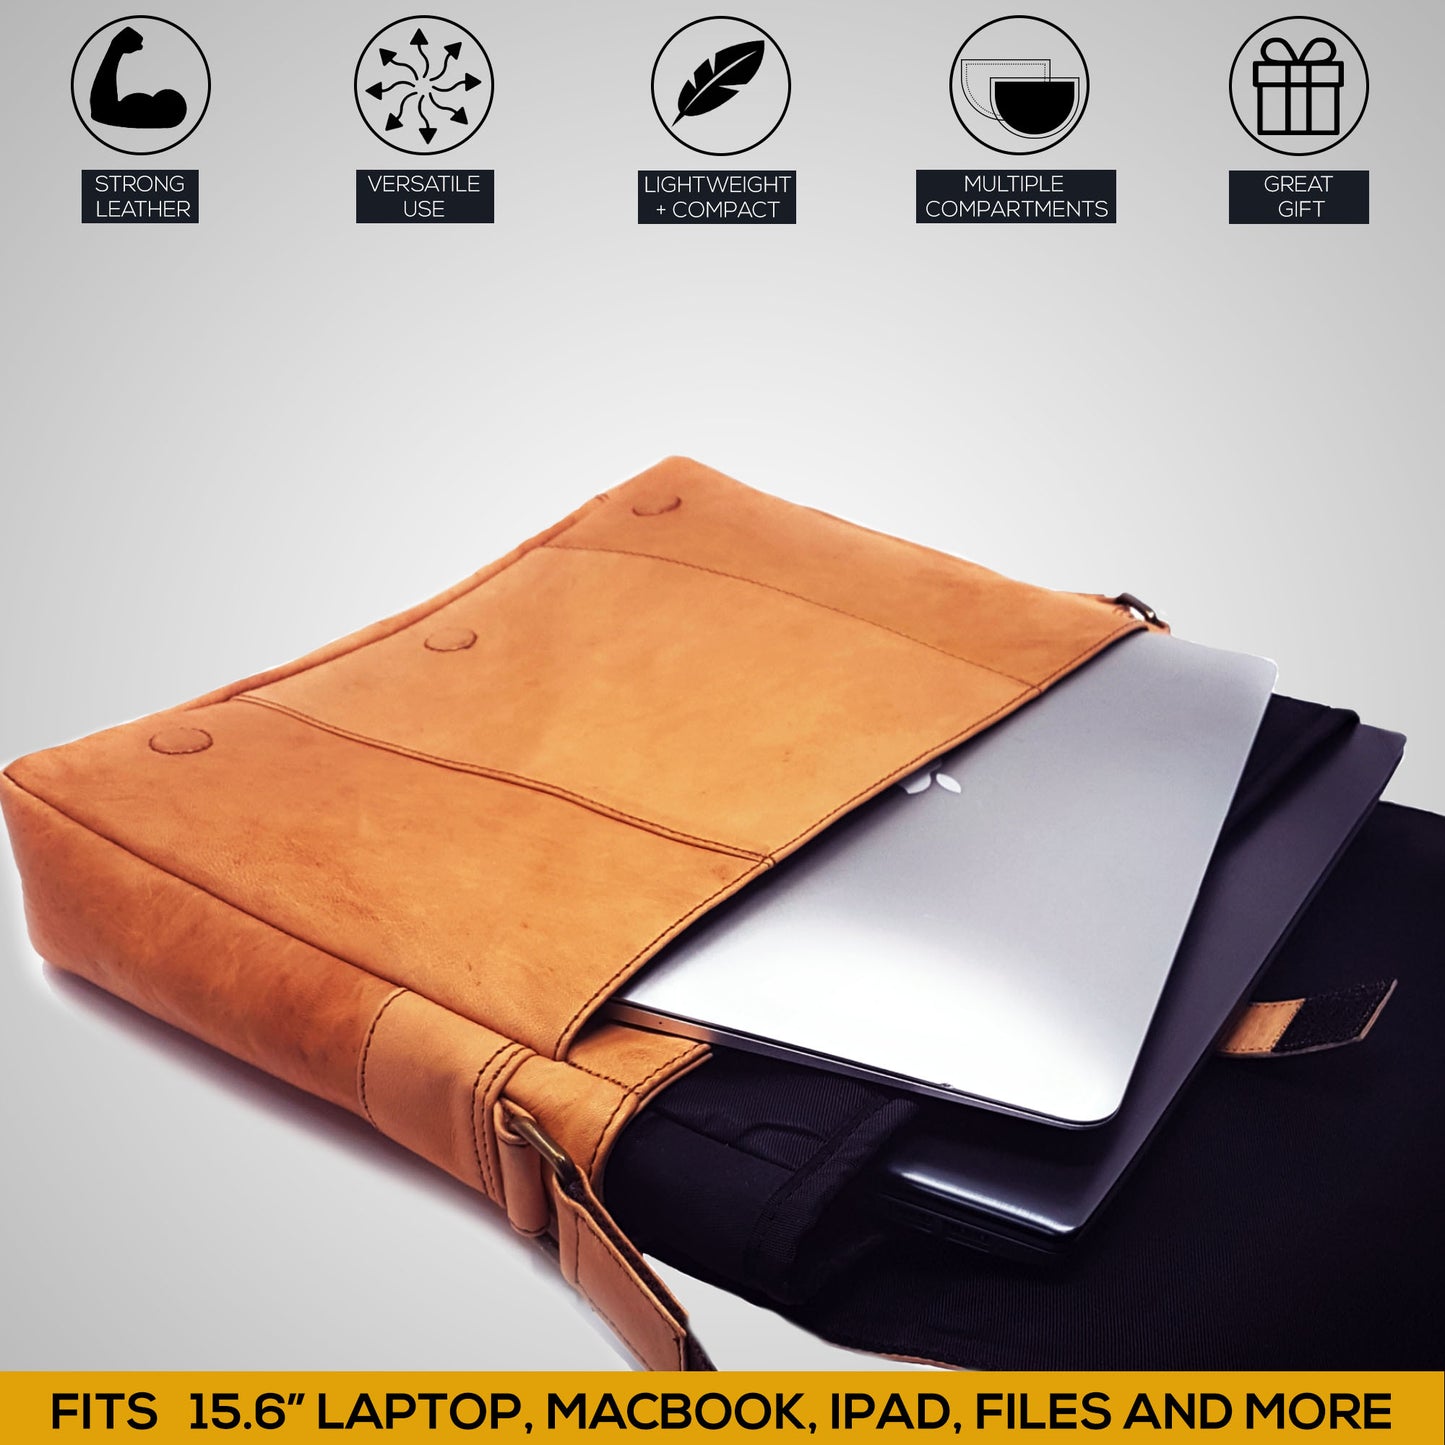 Leather Flapover Laptop Messenger Bag